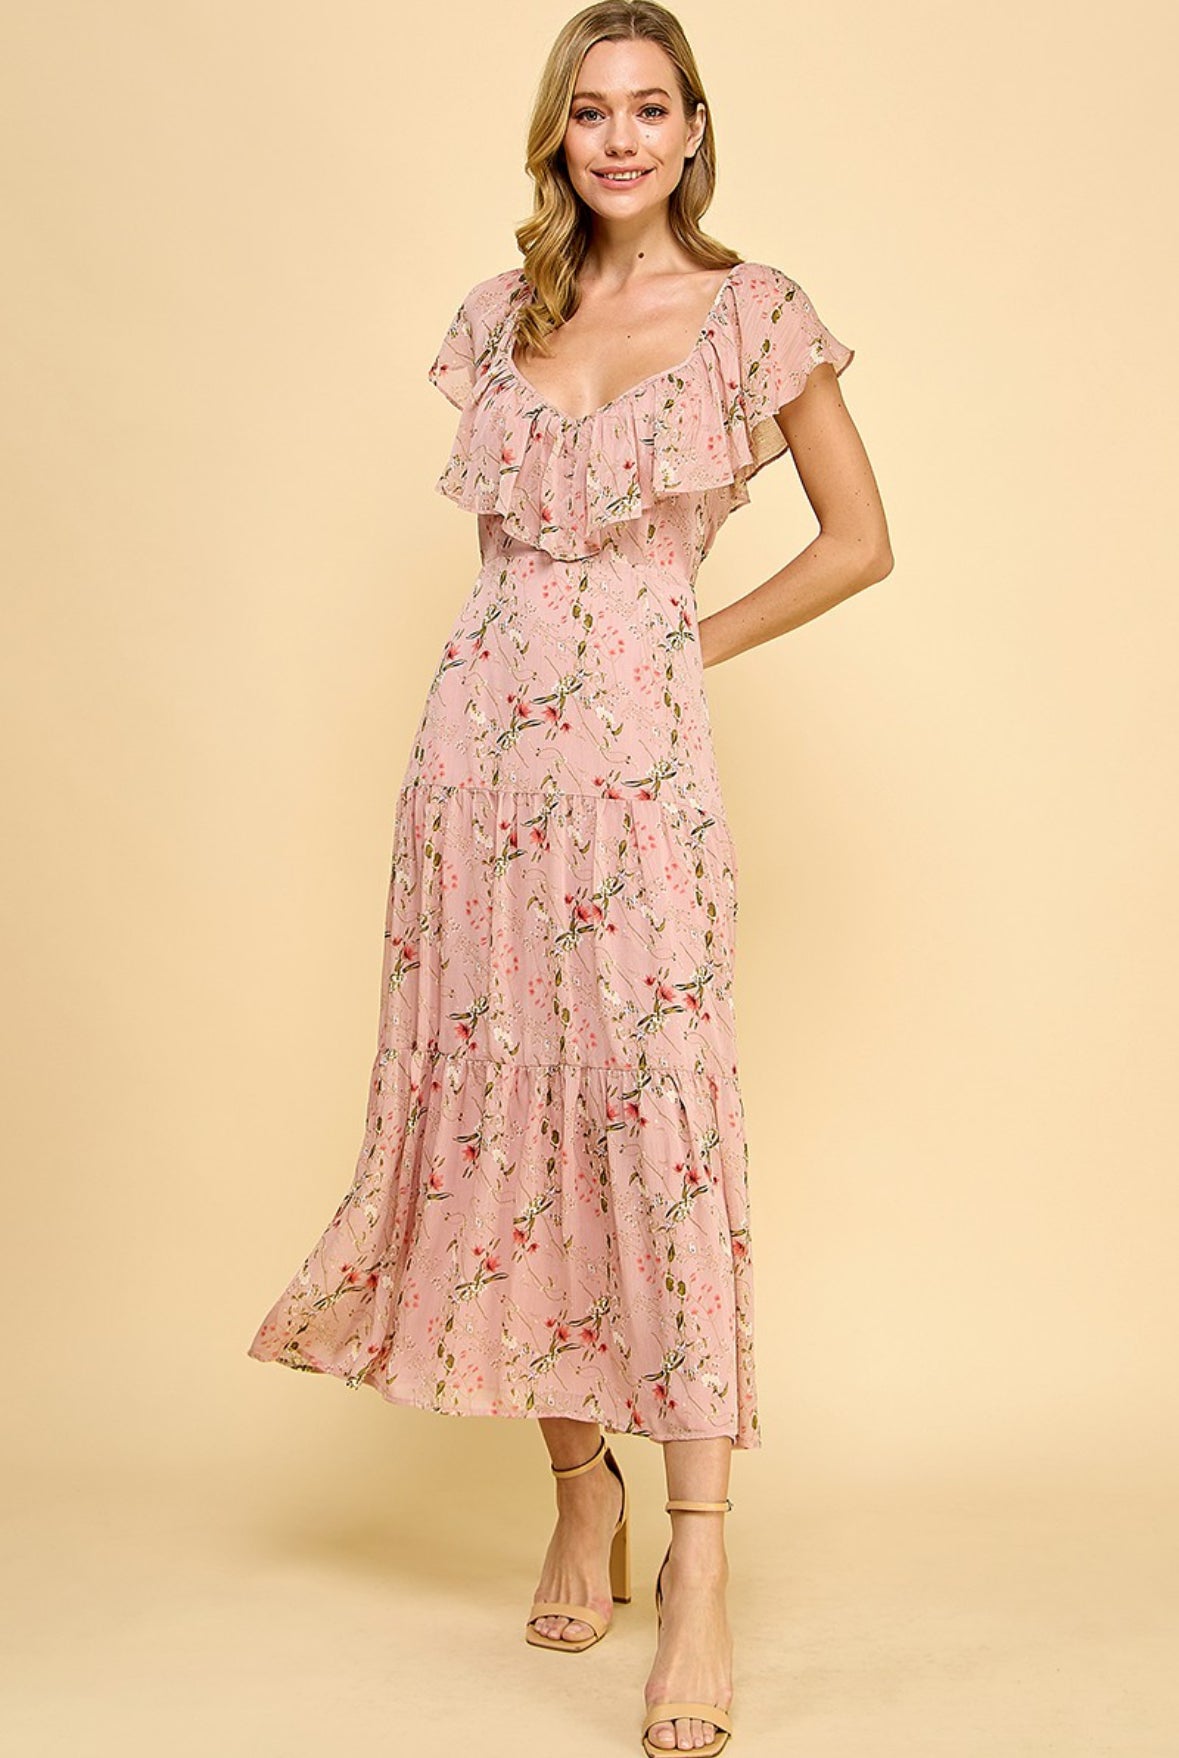 Rosy Romance Dress